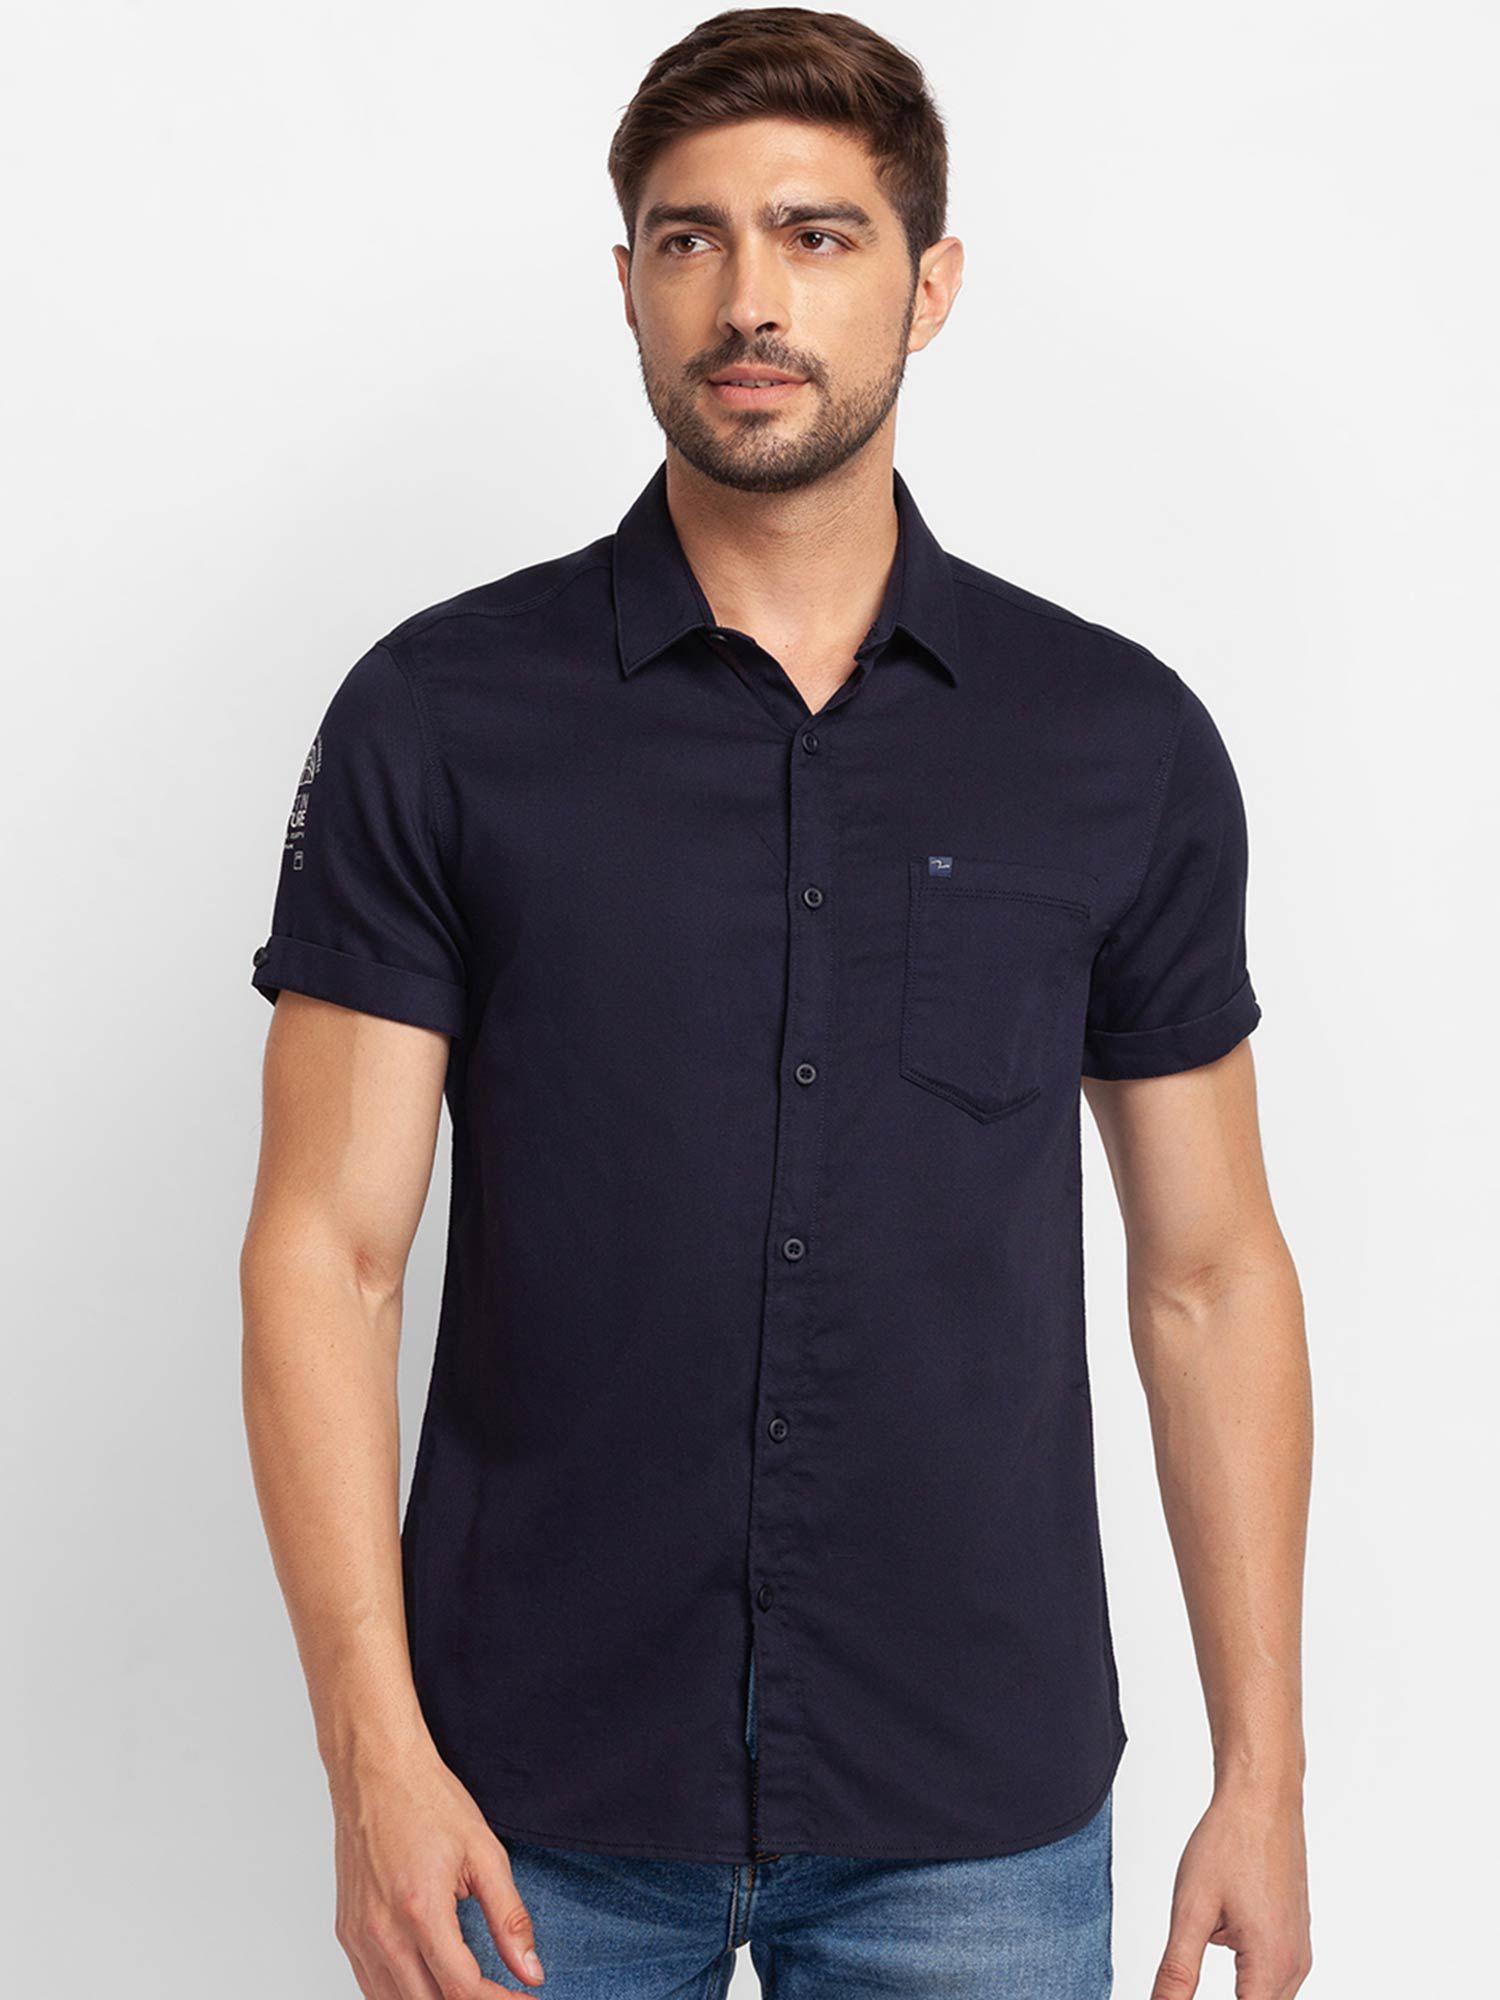 navy-blue-cotton-half-sleeve-plain-shirt-for-men